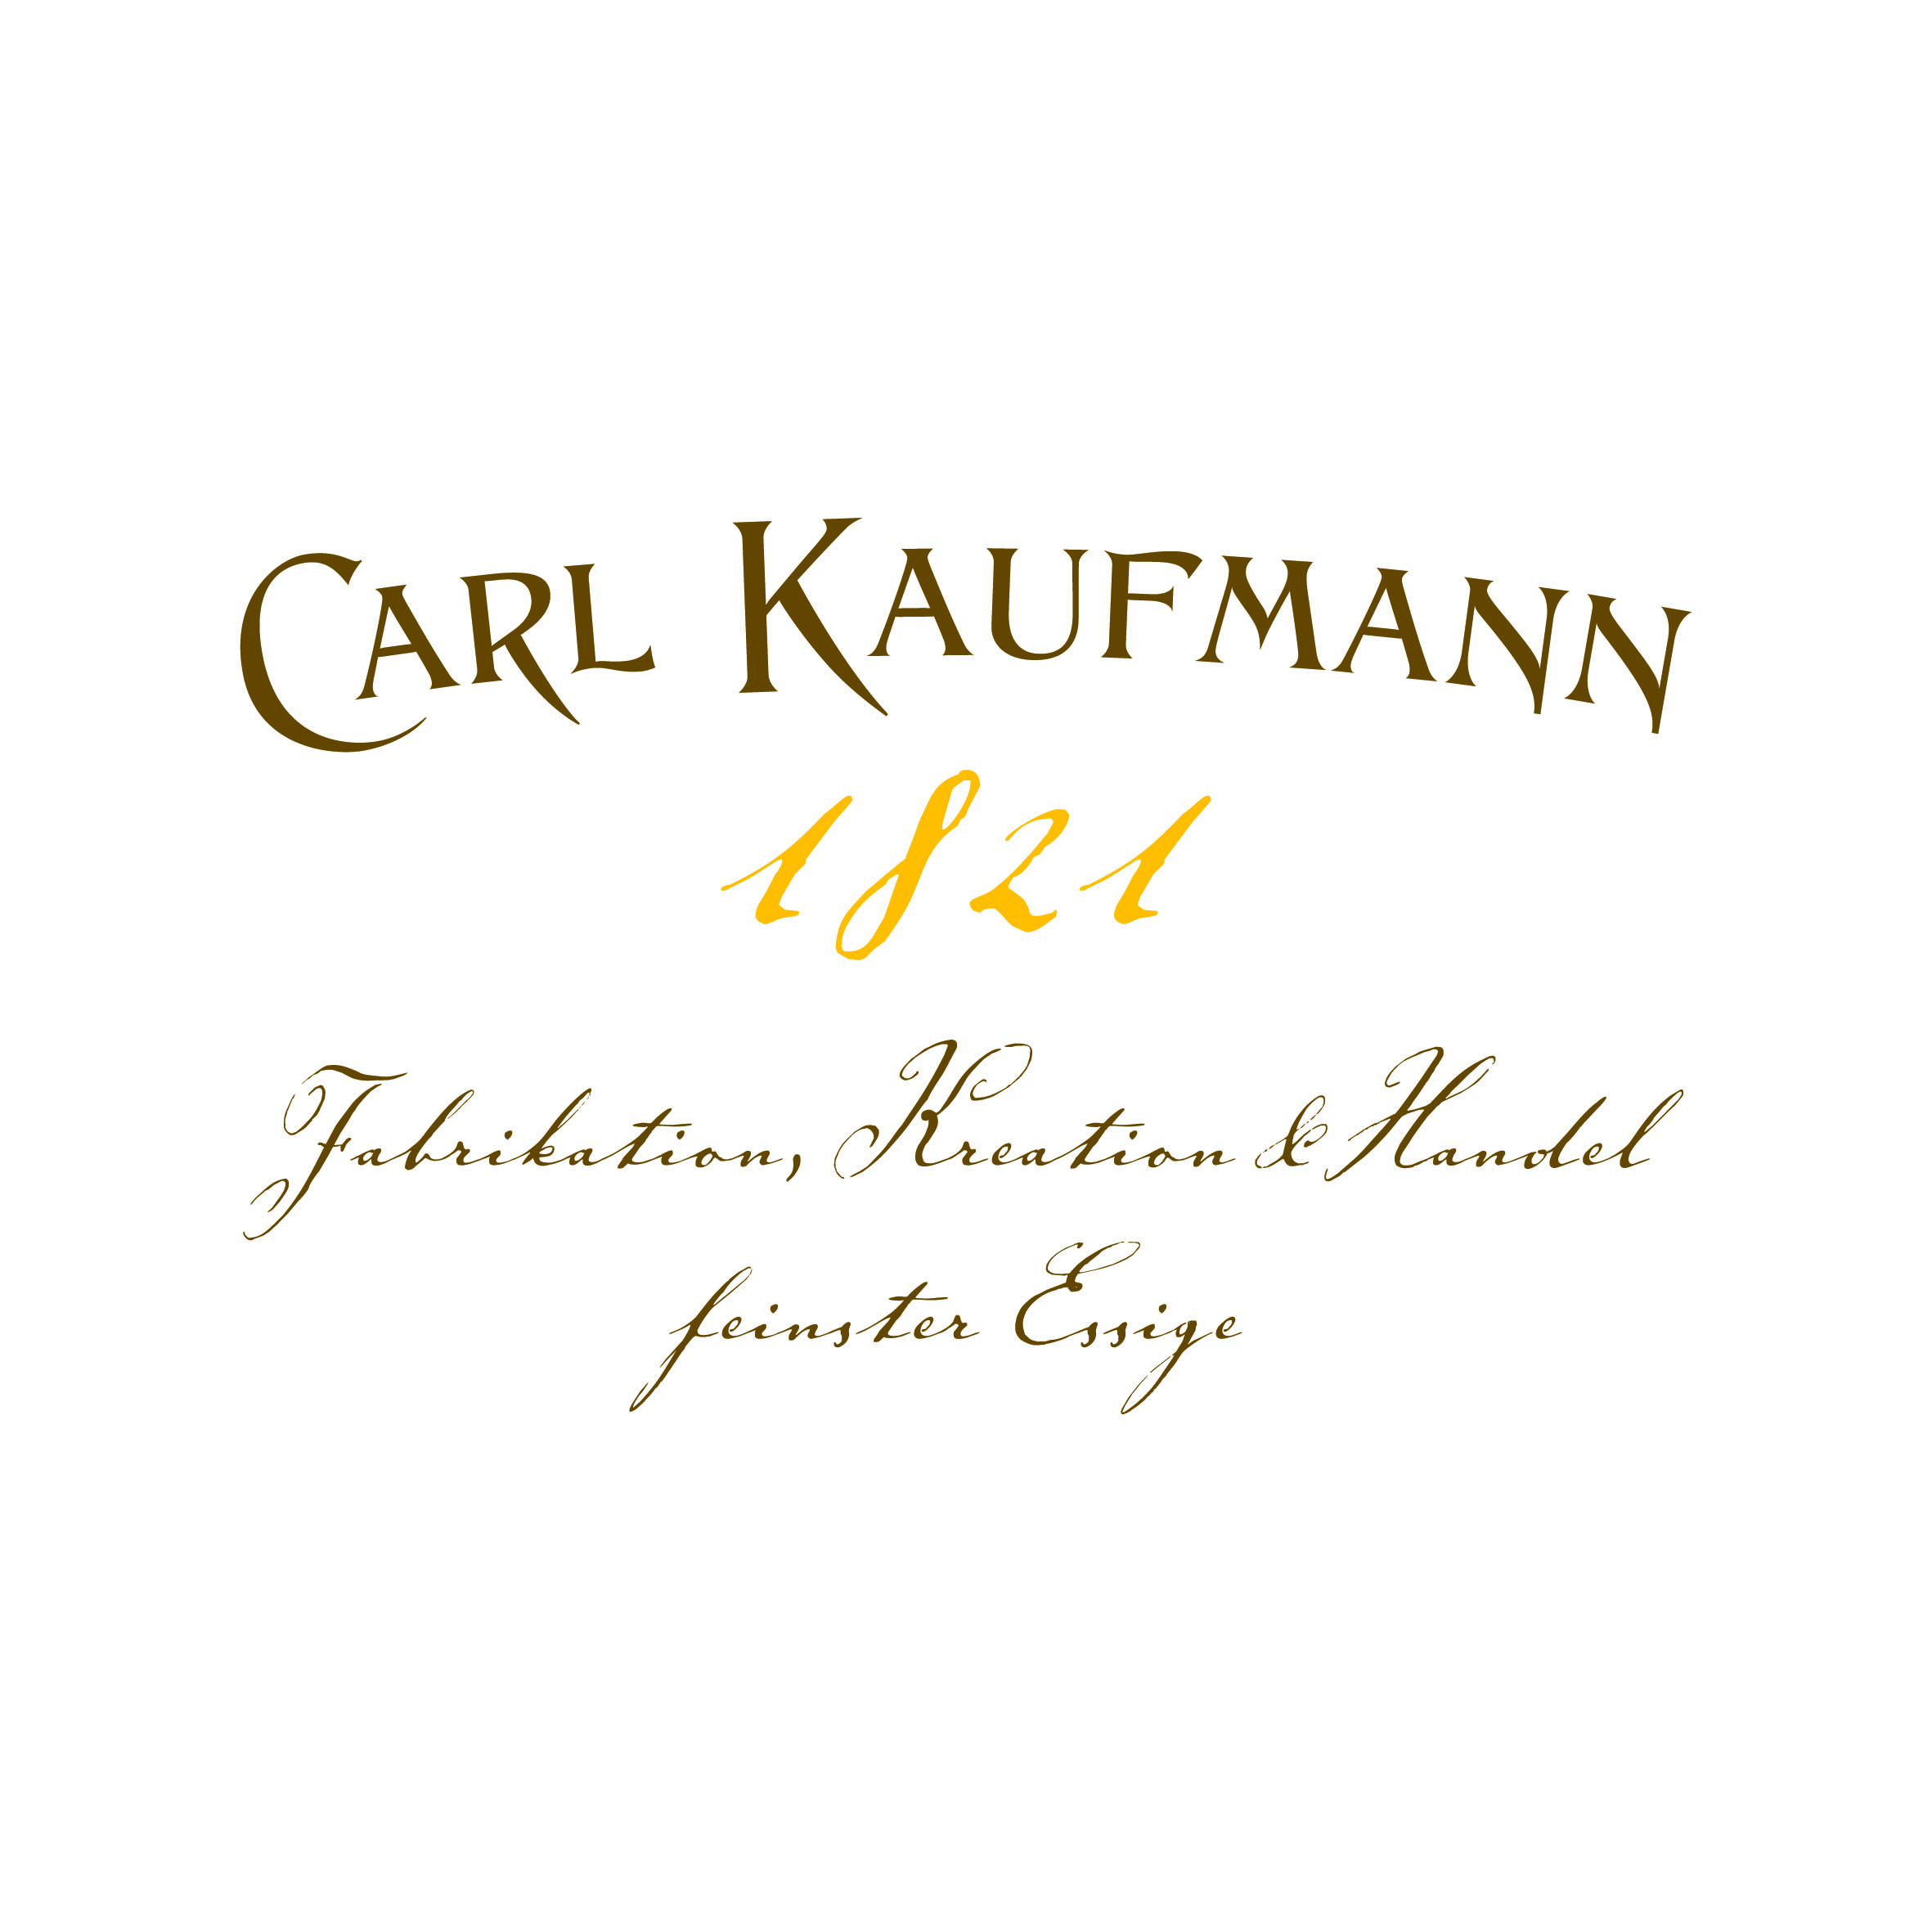 Carl Kaufmann 